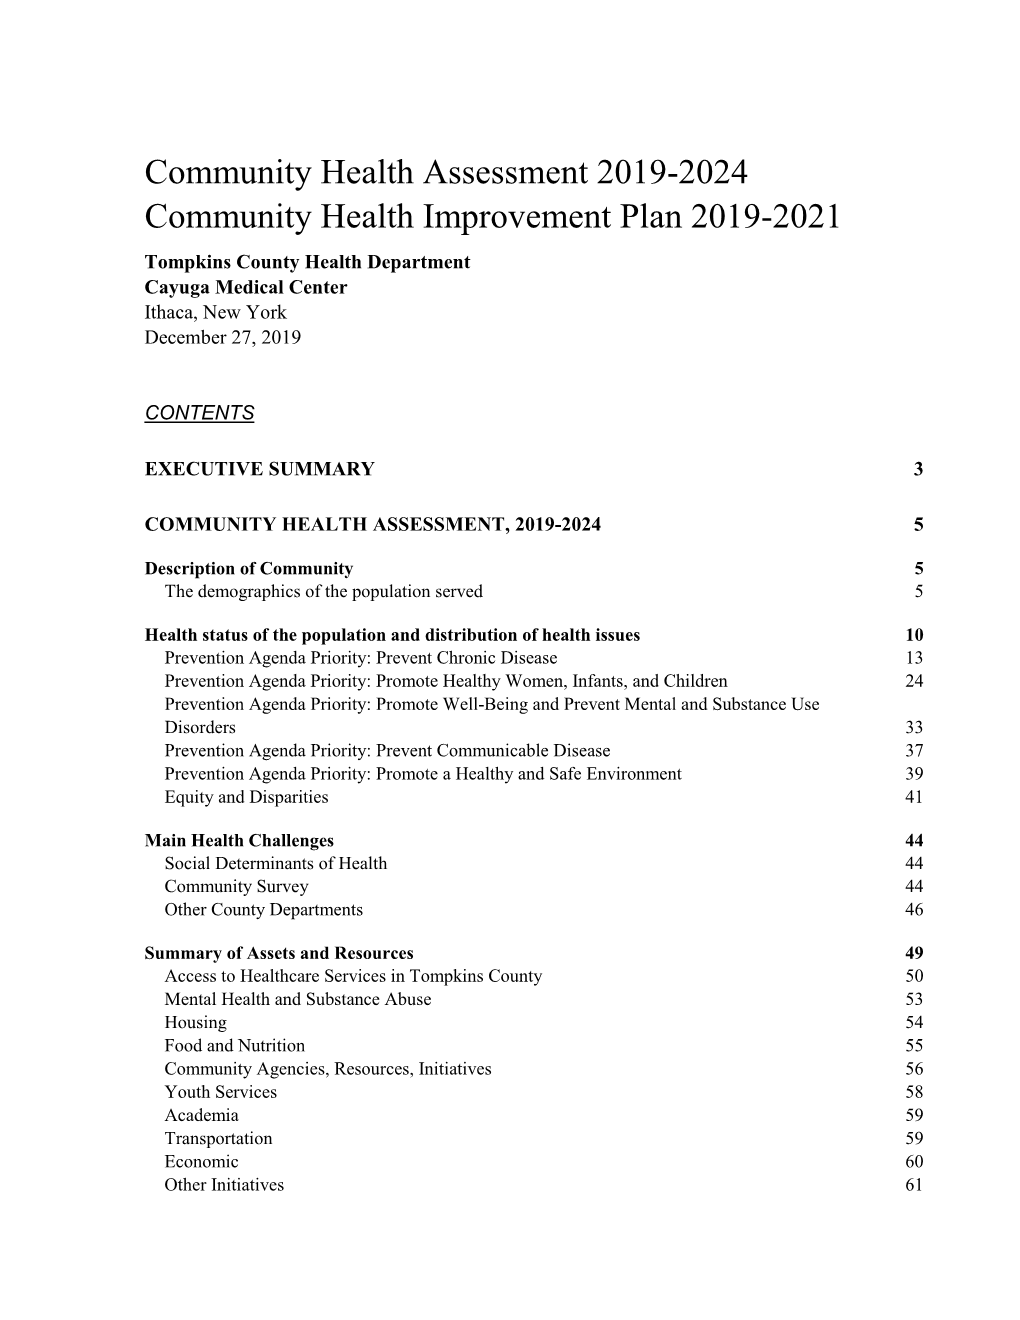 Community Health Assessment 2019-2024 Community Health Improvement Plan 2019-2021